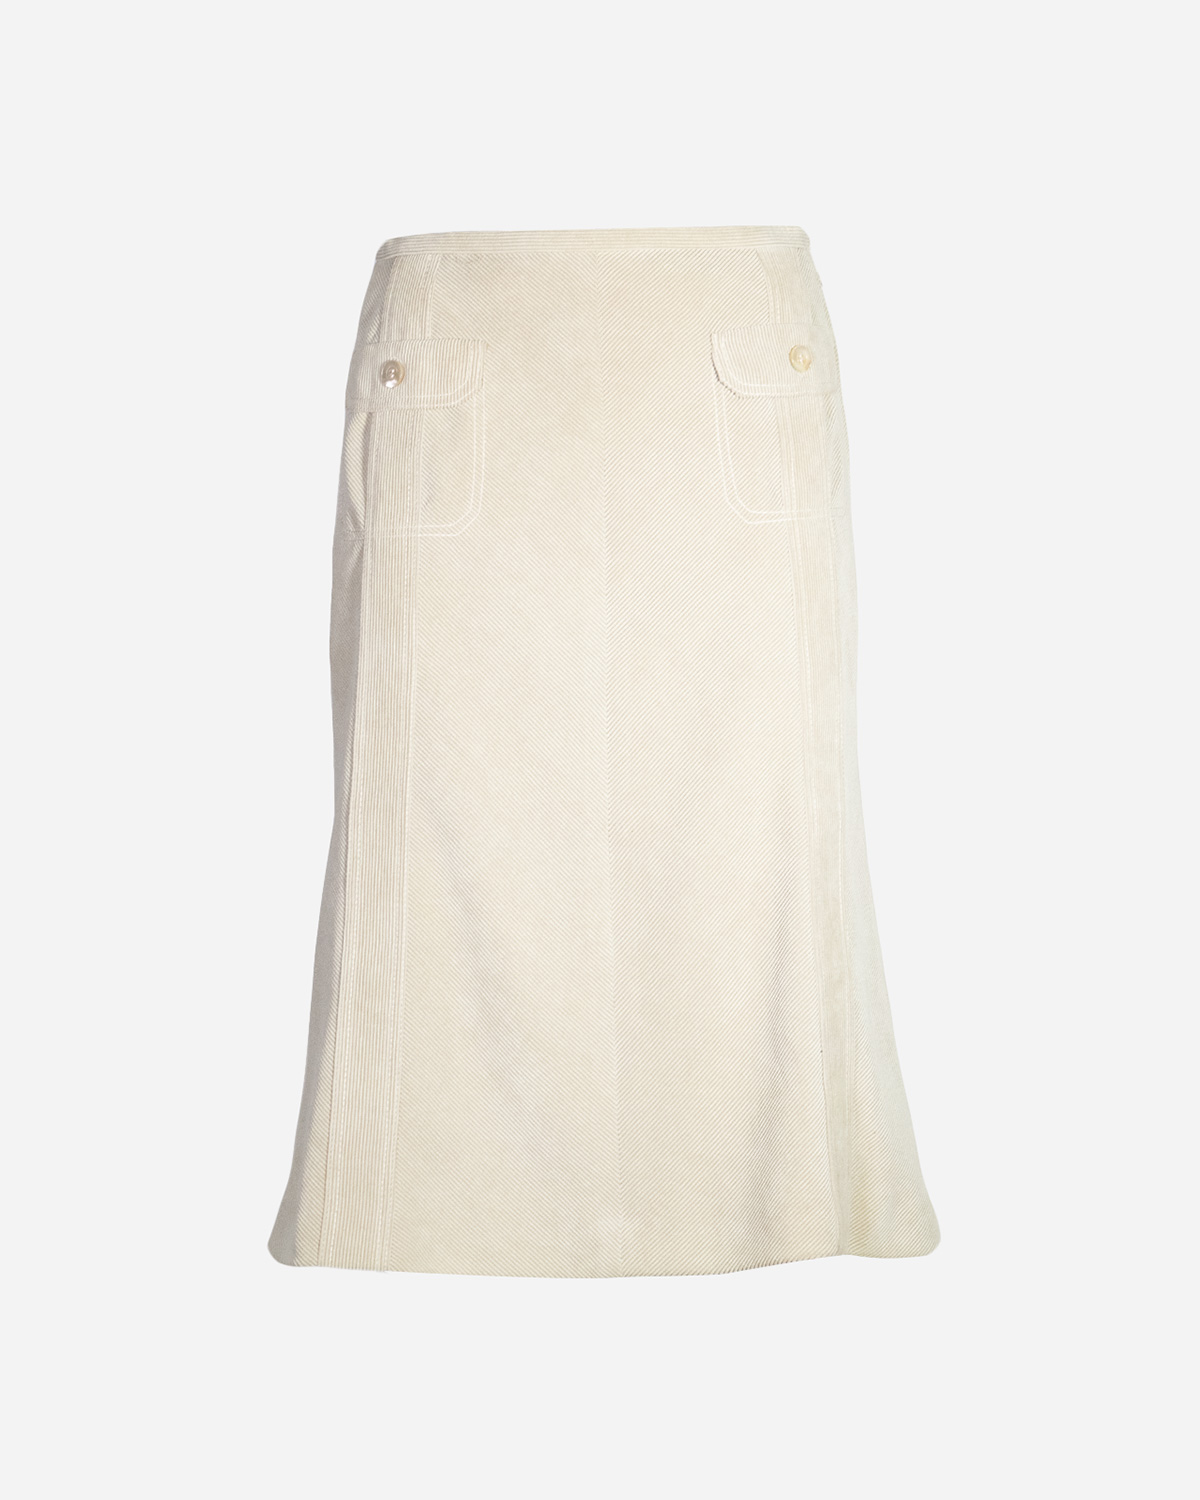 Vintage velvet skirts: 4 pieces